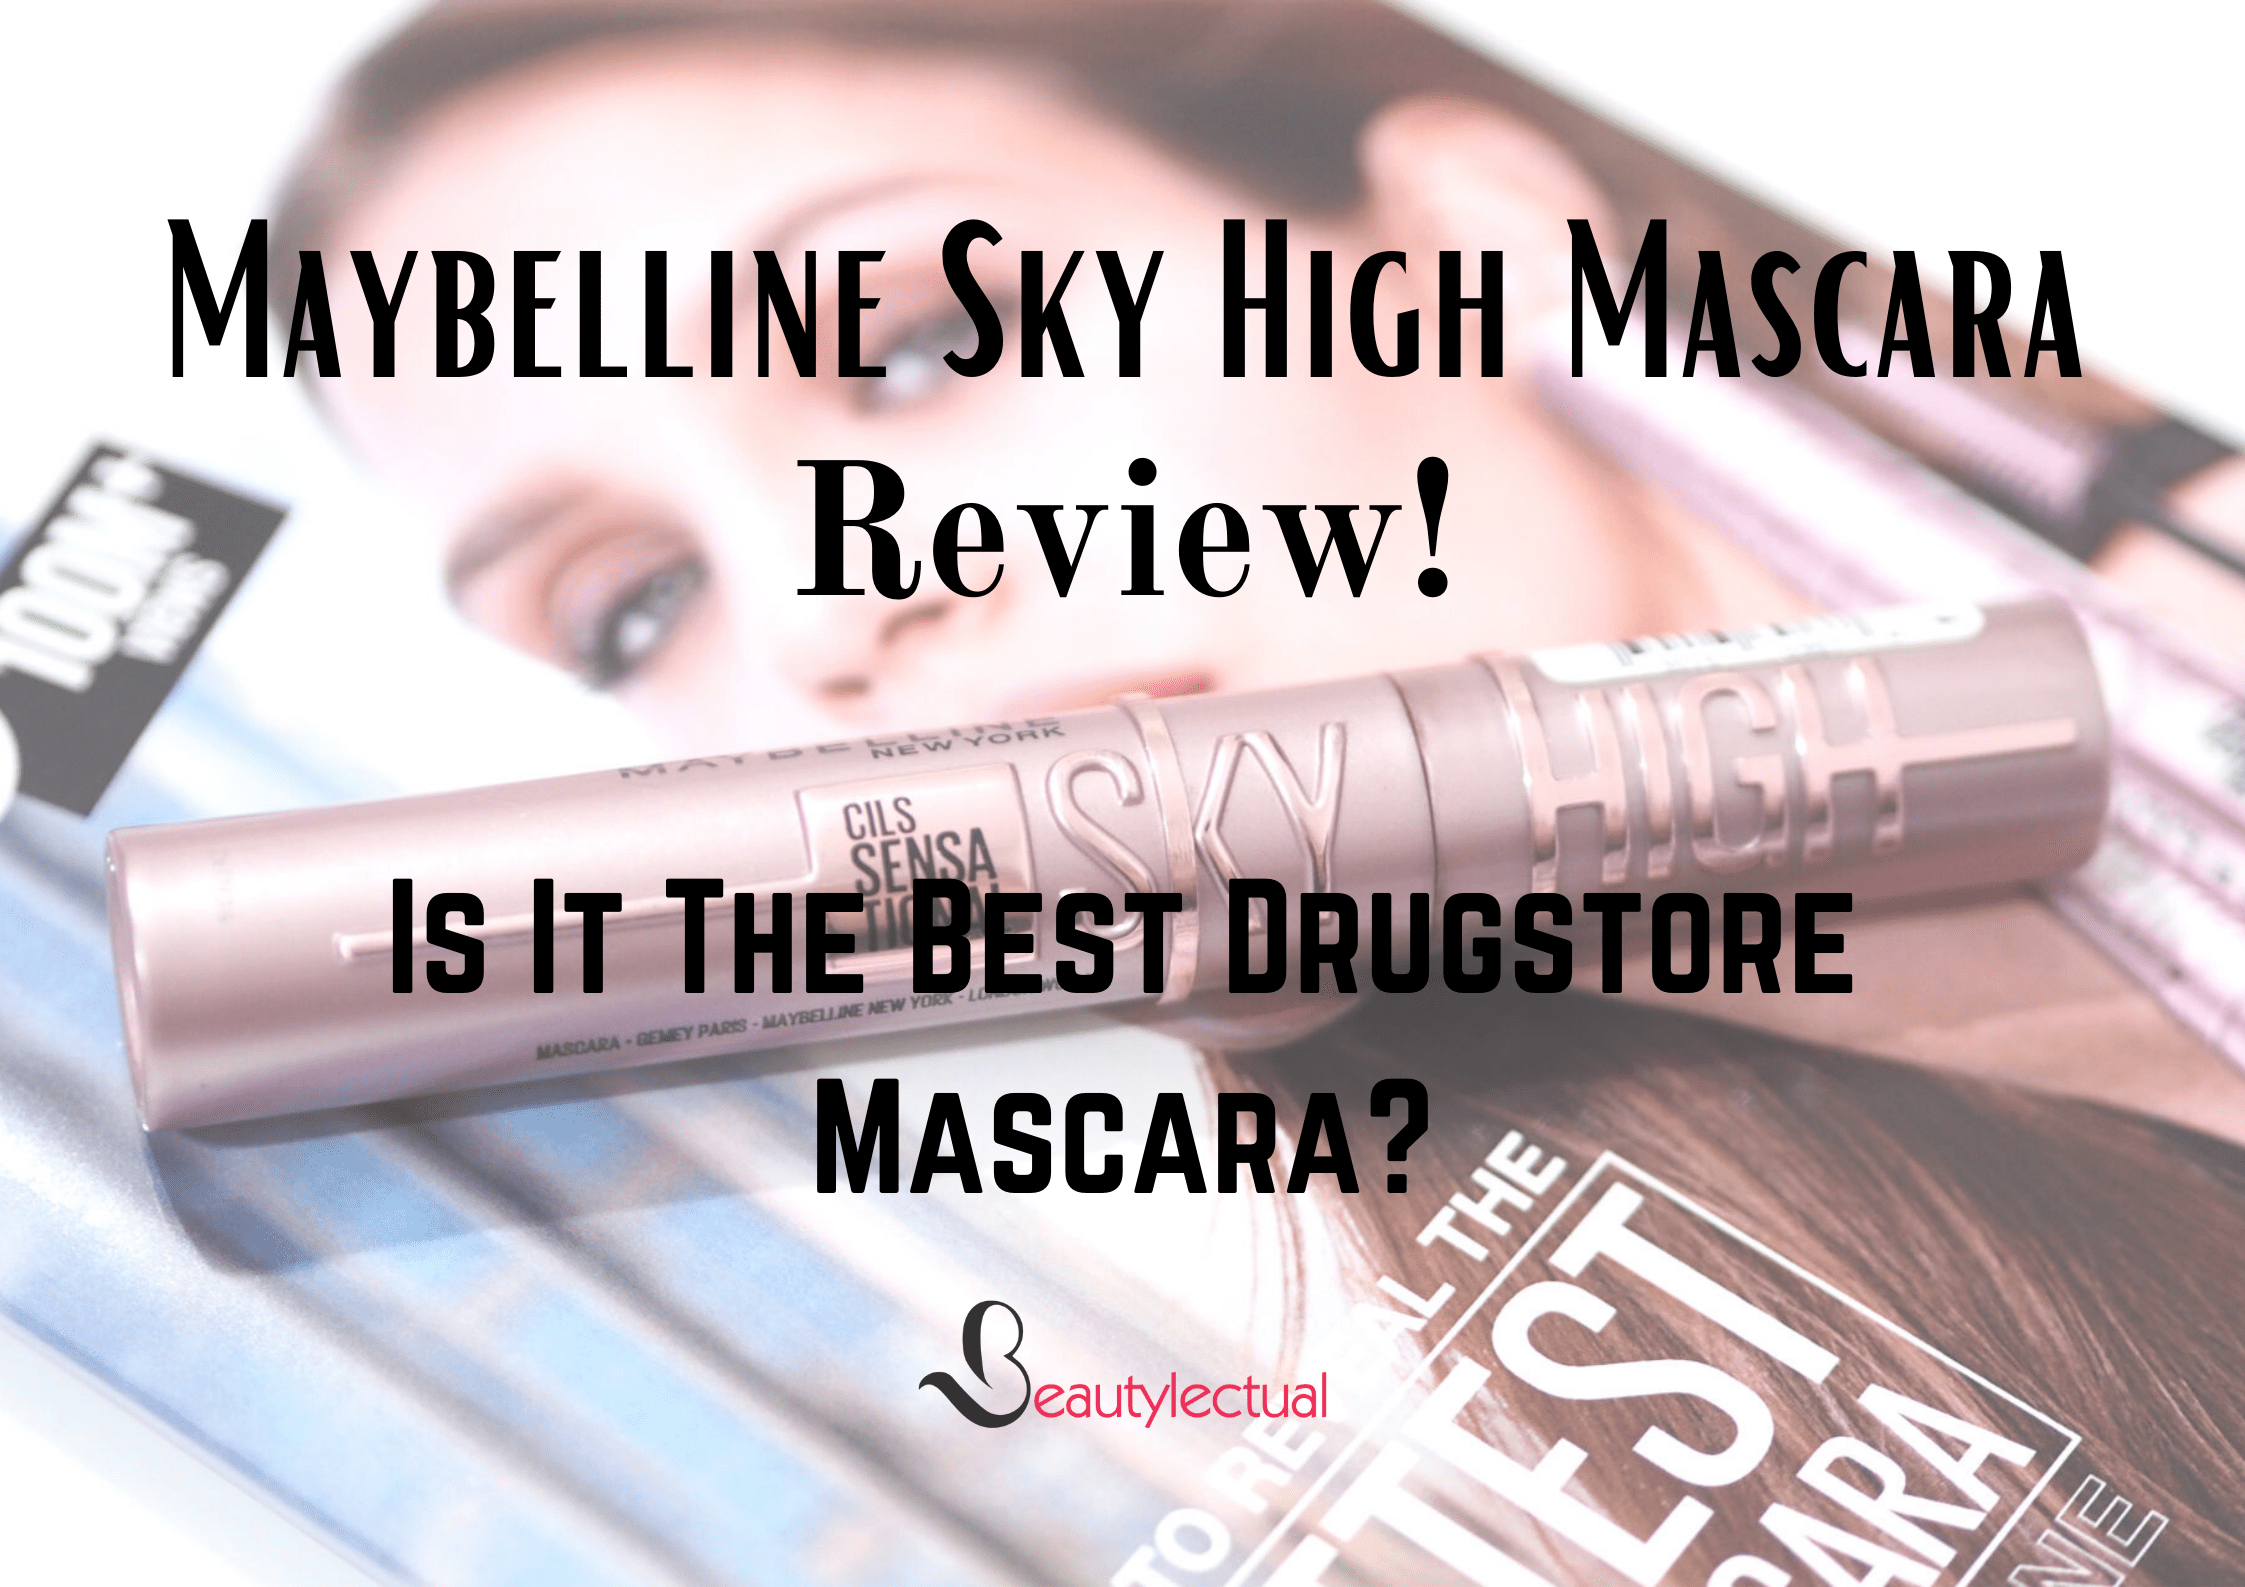 Maybelline Sky High Mascara Reviews